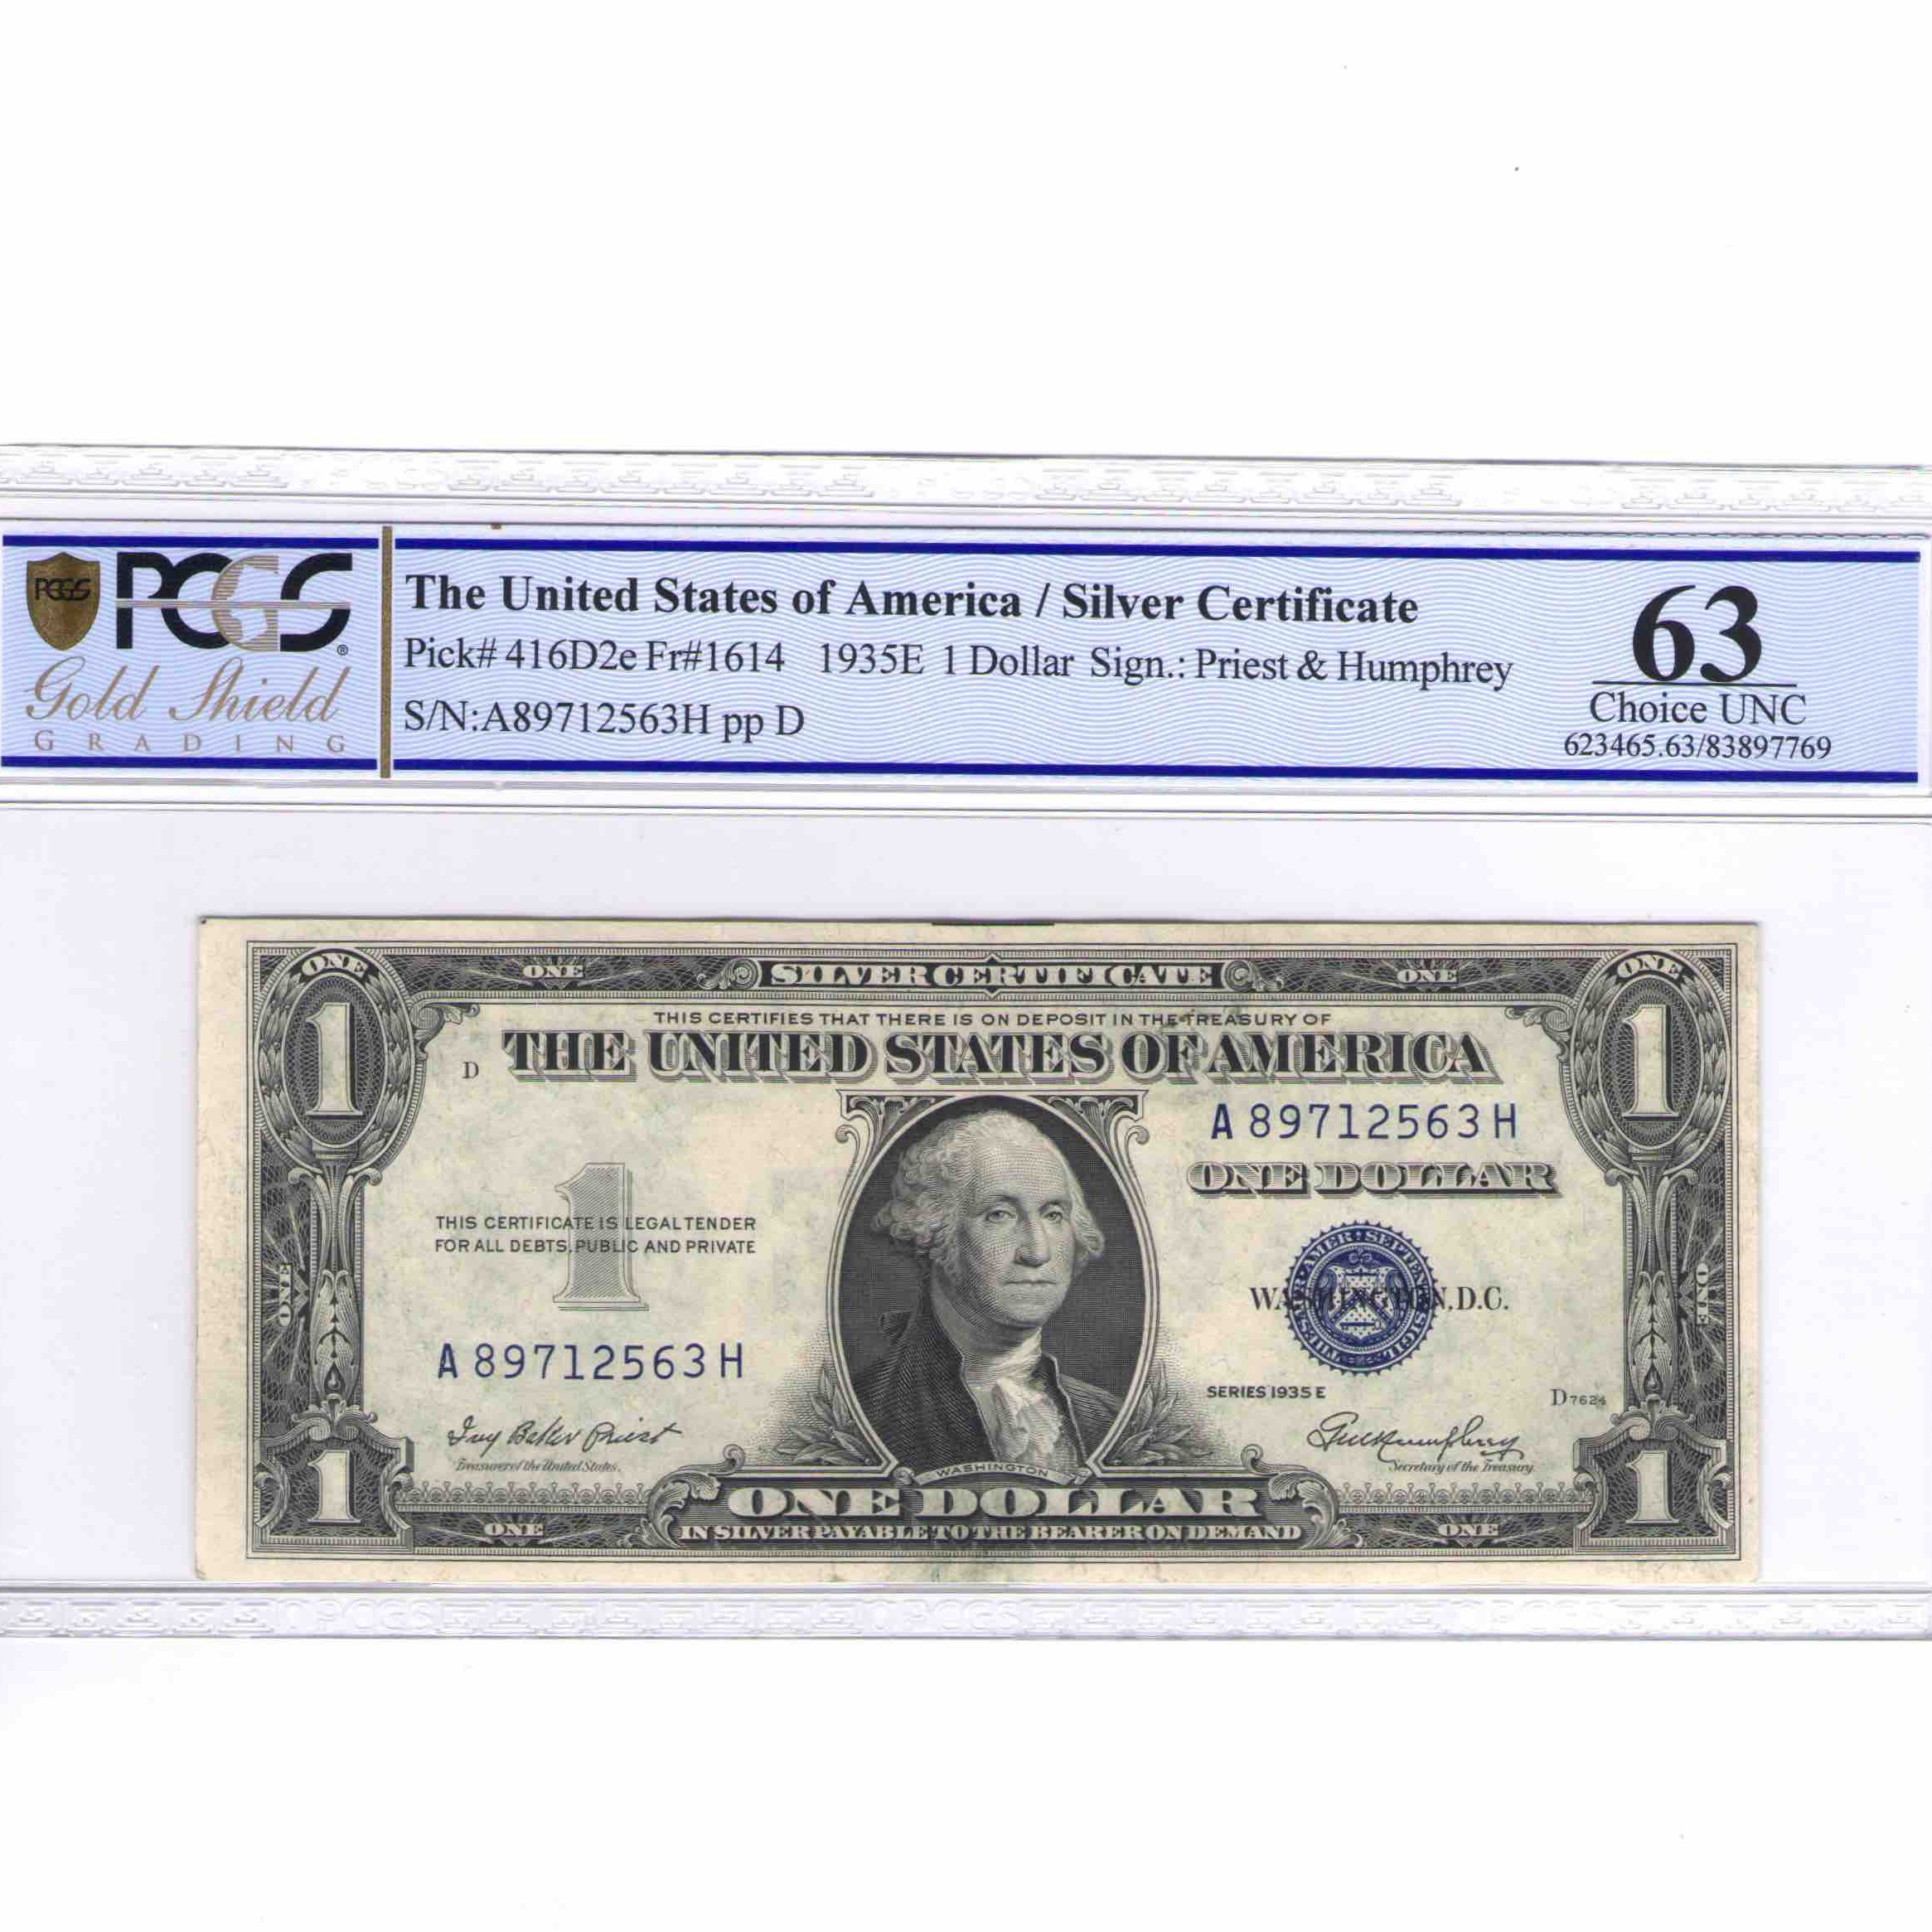 USA - 1 DOLLAR Silver certificate - 1935 avers